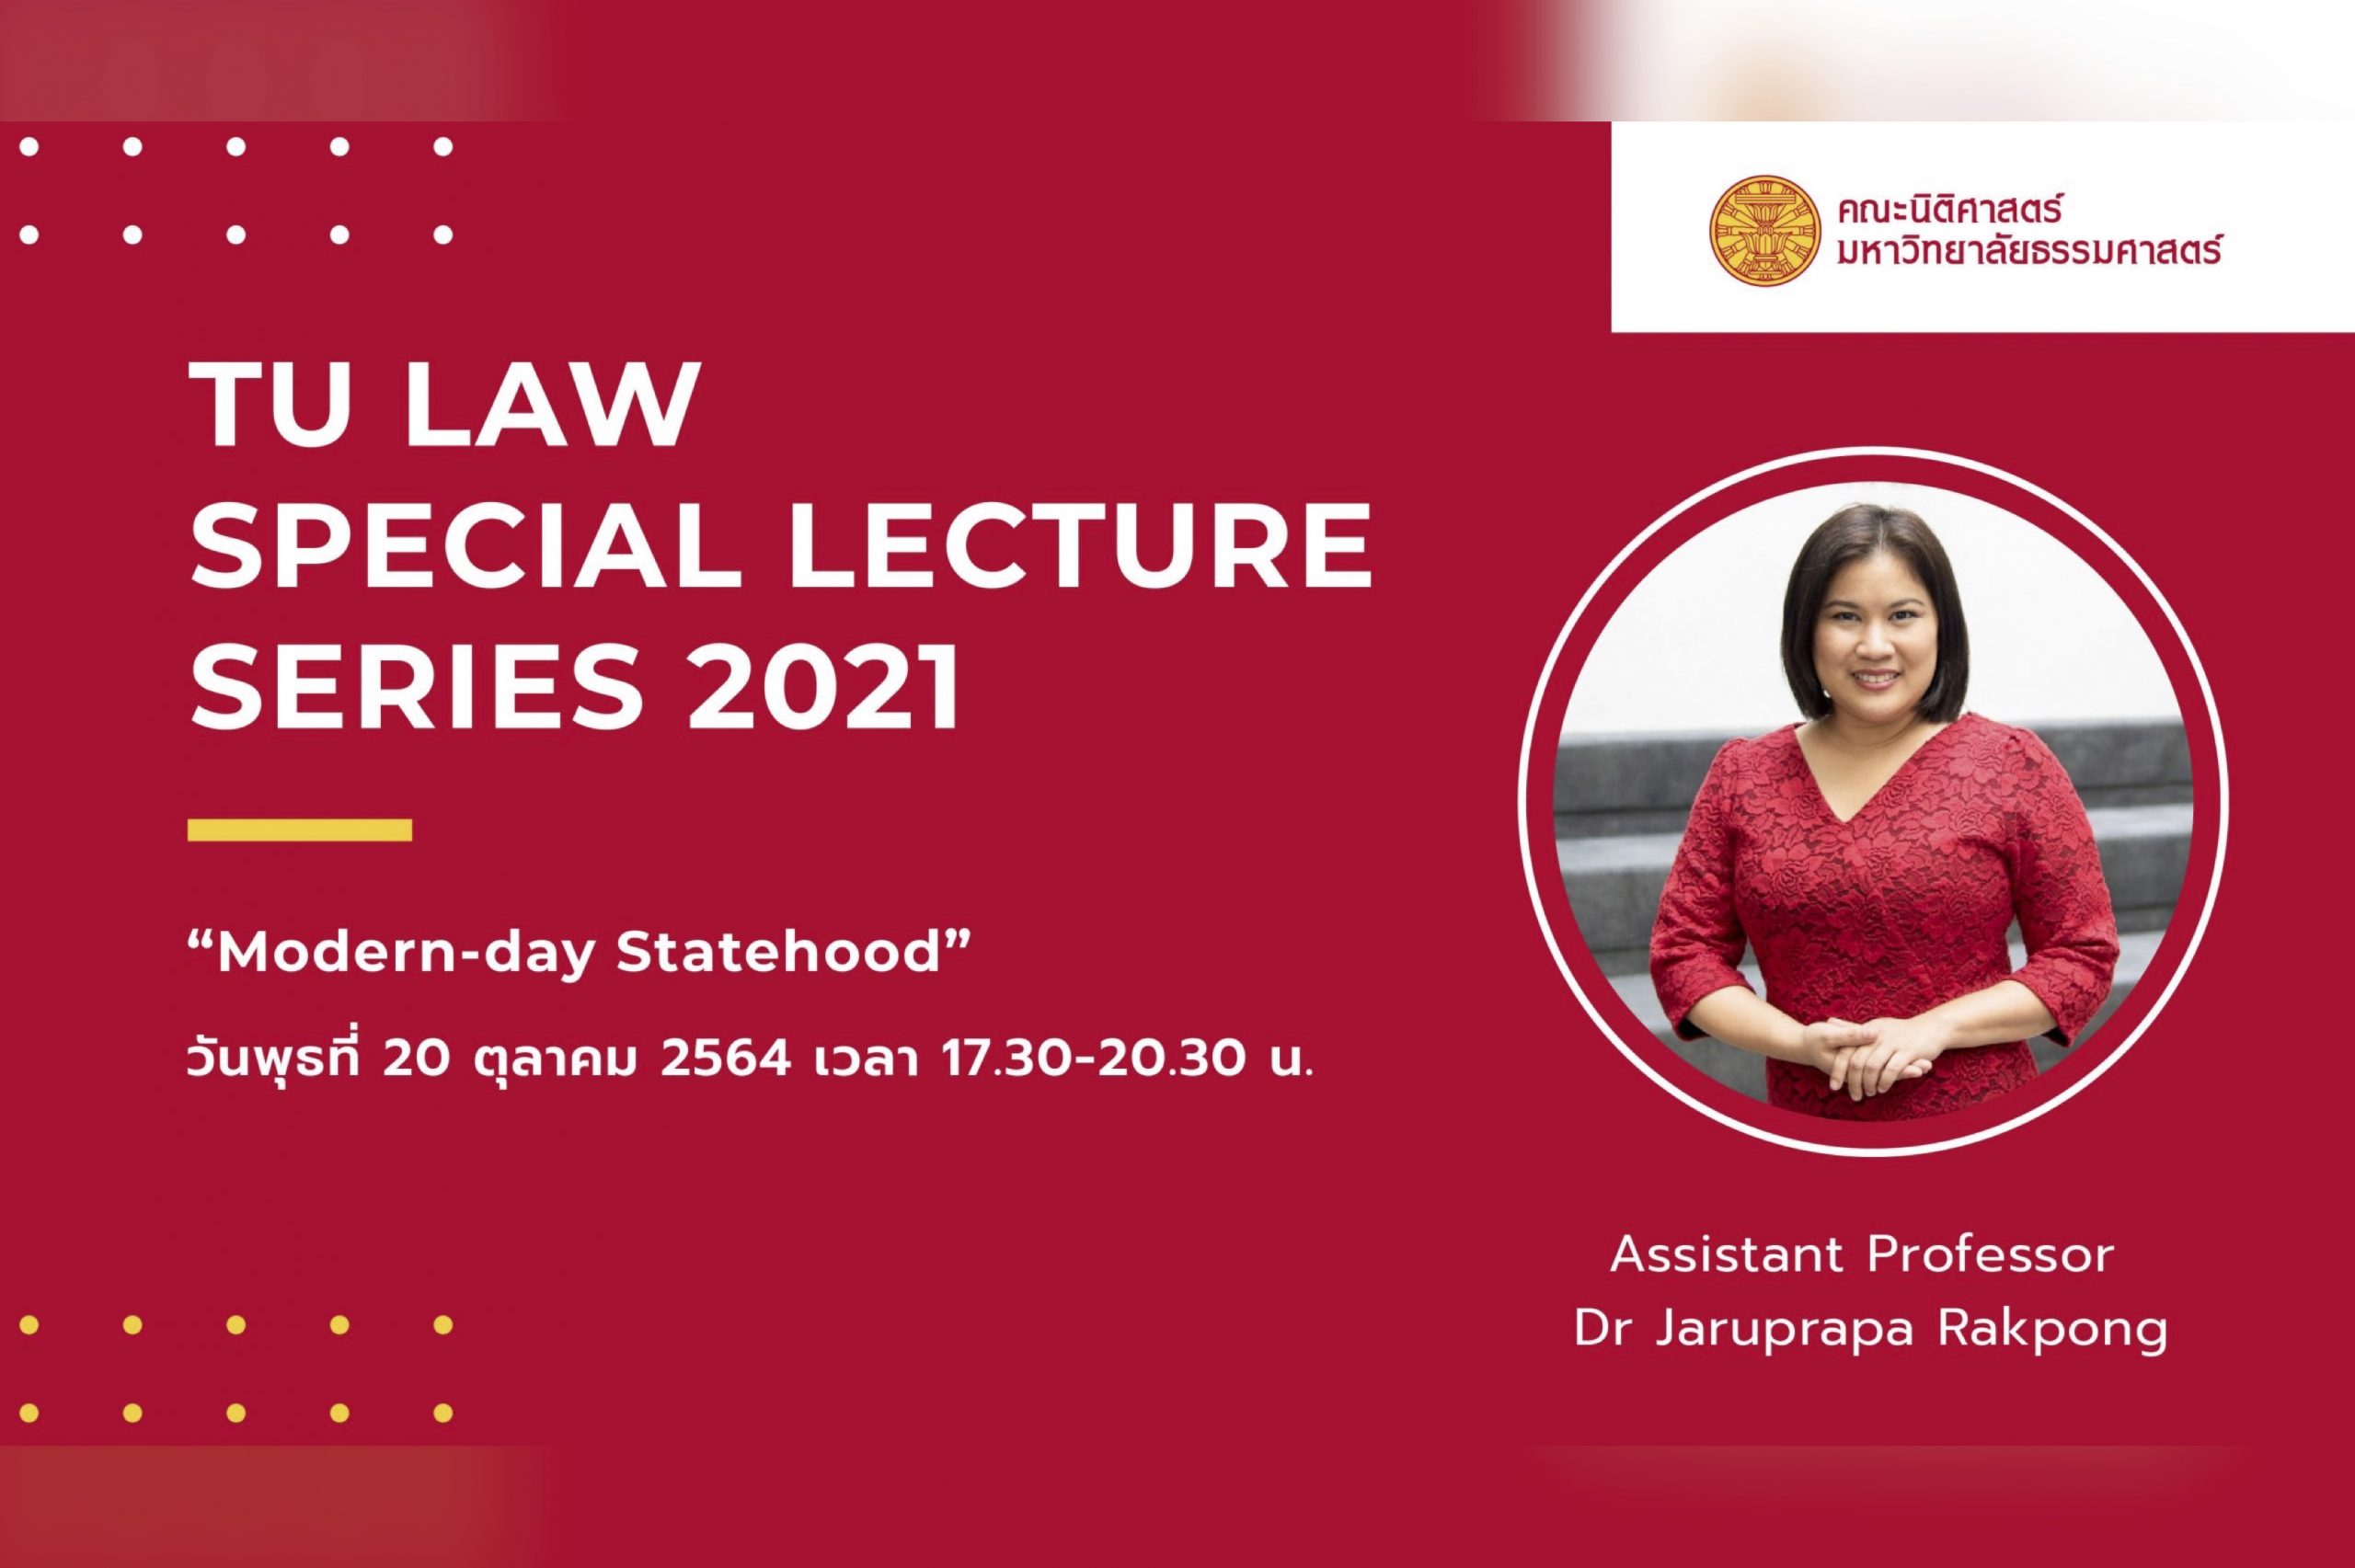 TU Law Special Lecture Series 2021 วันพุธที่ 20 ตุลาคม 2564 เวลา 17.30 -20.30 น. หัวข้อ “Modern-day Statehood” โดย Assistant Professor Dr Jaruprapa Rakpong